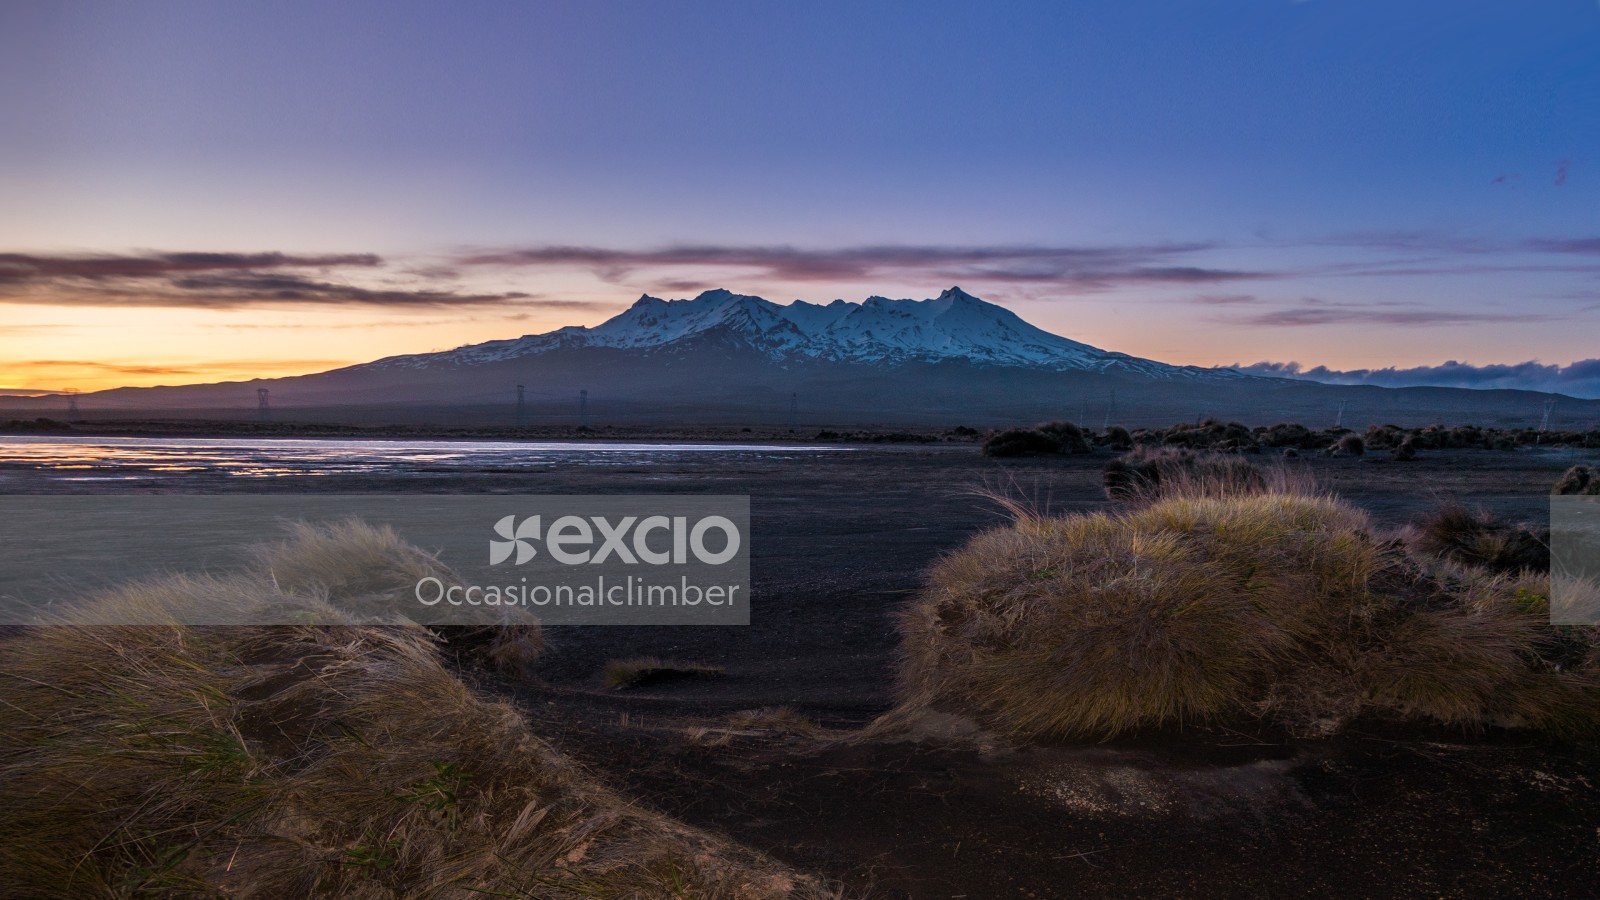 Mount Ruapehu at dusk